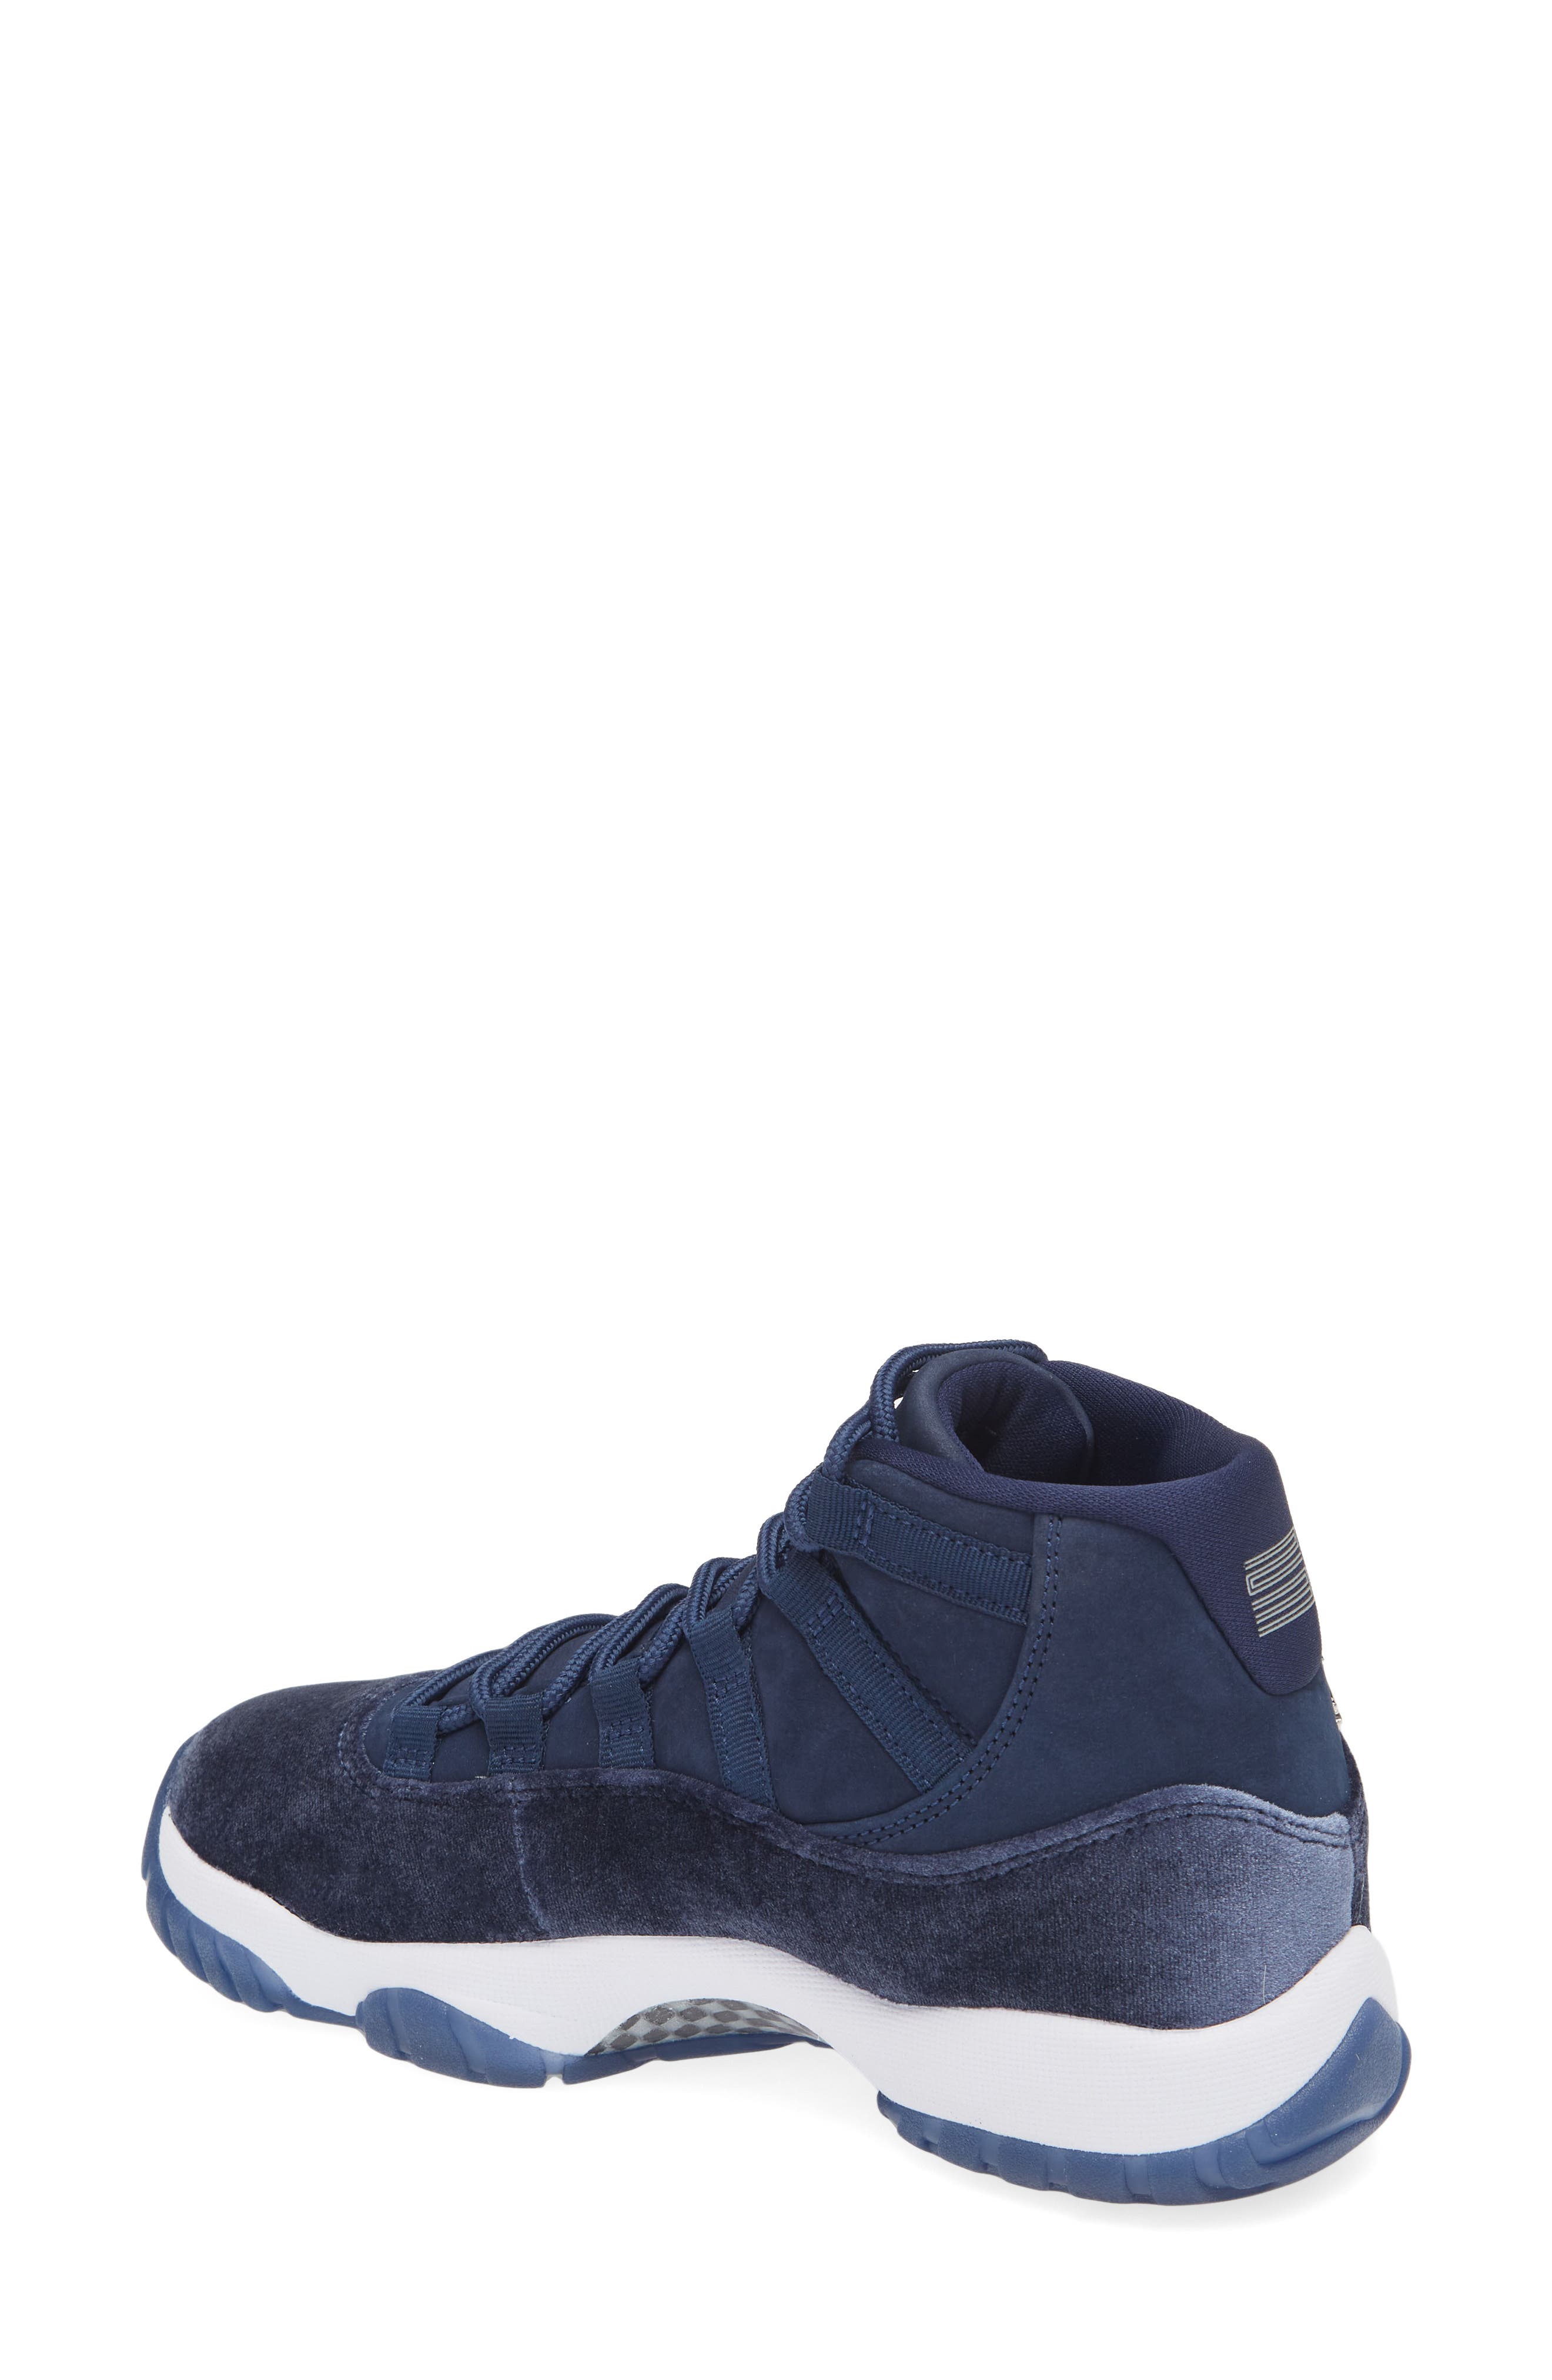 Jordan Nike Air Jordan 11 Retro Sneaker 